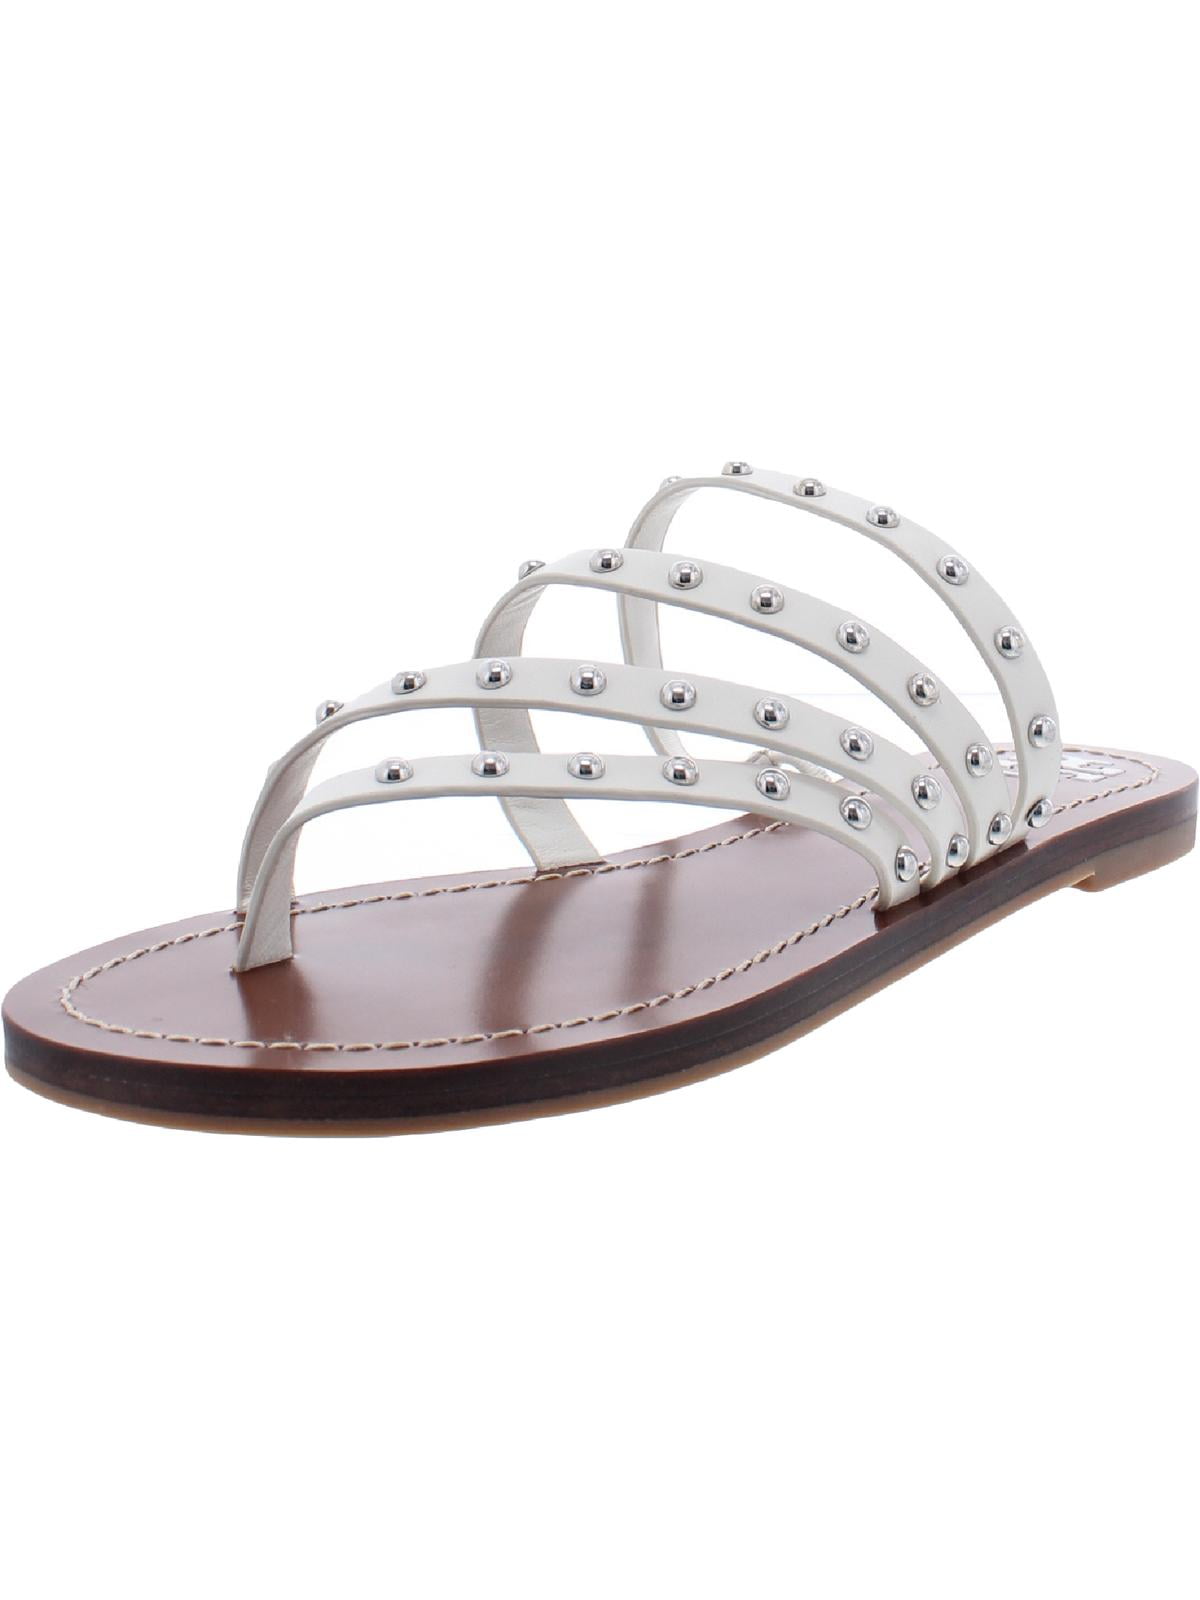 Aerosoles Womens Yoyo Flat Sandal 8.5 Bone Leather - Walmart.com